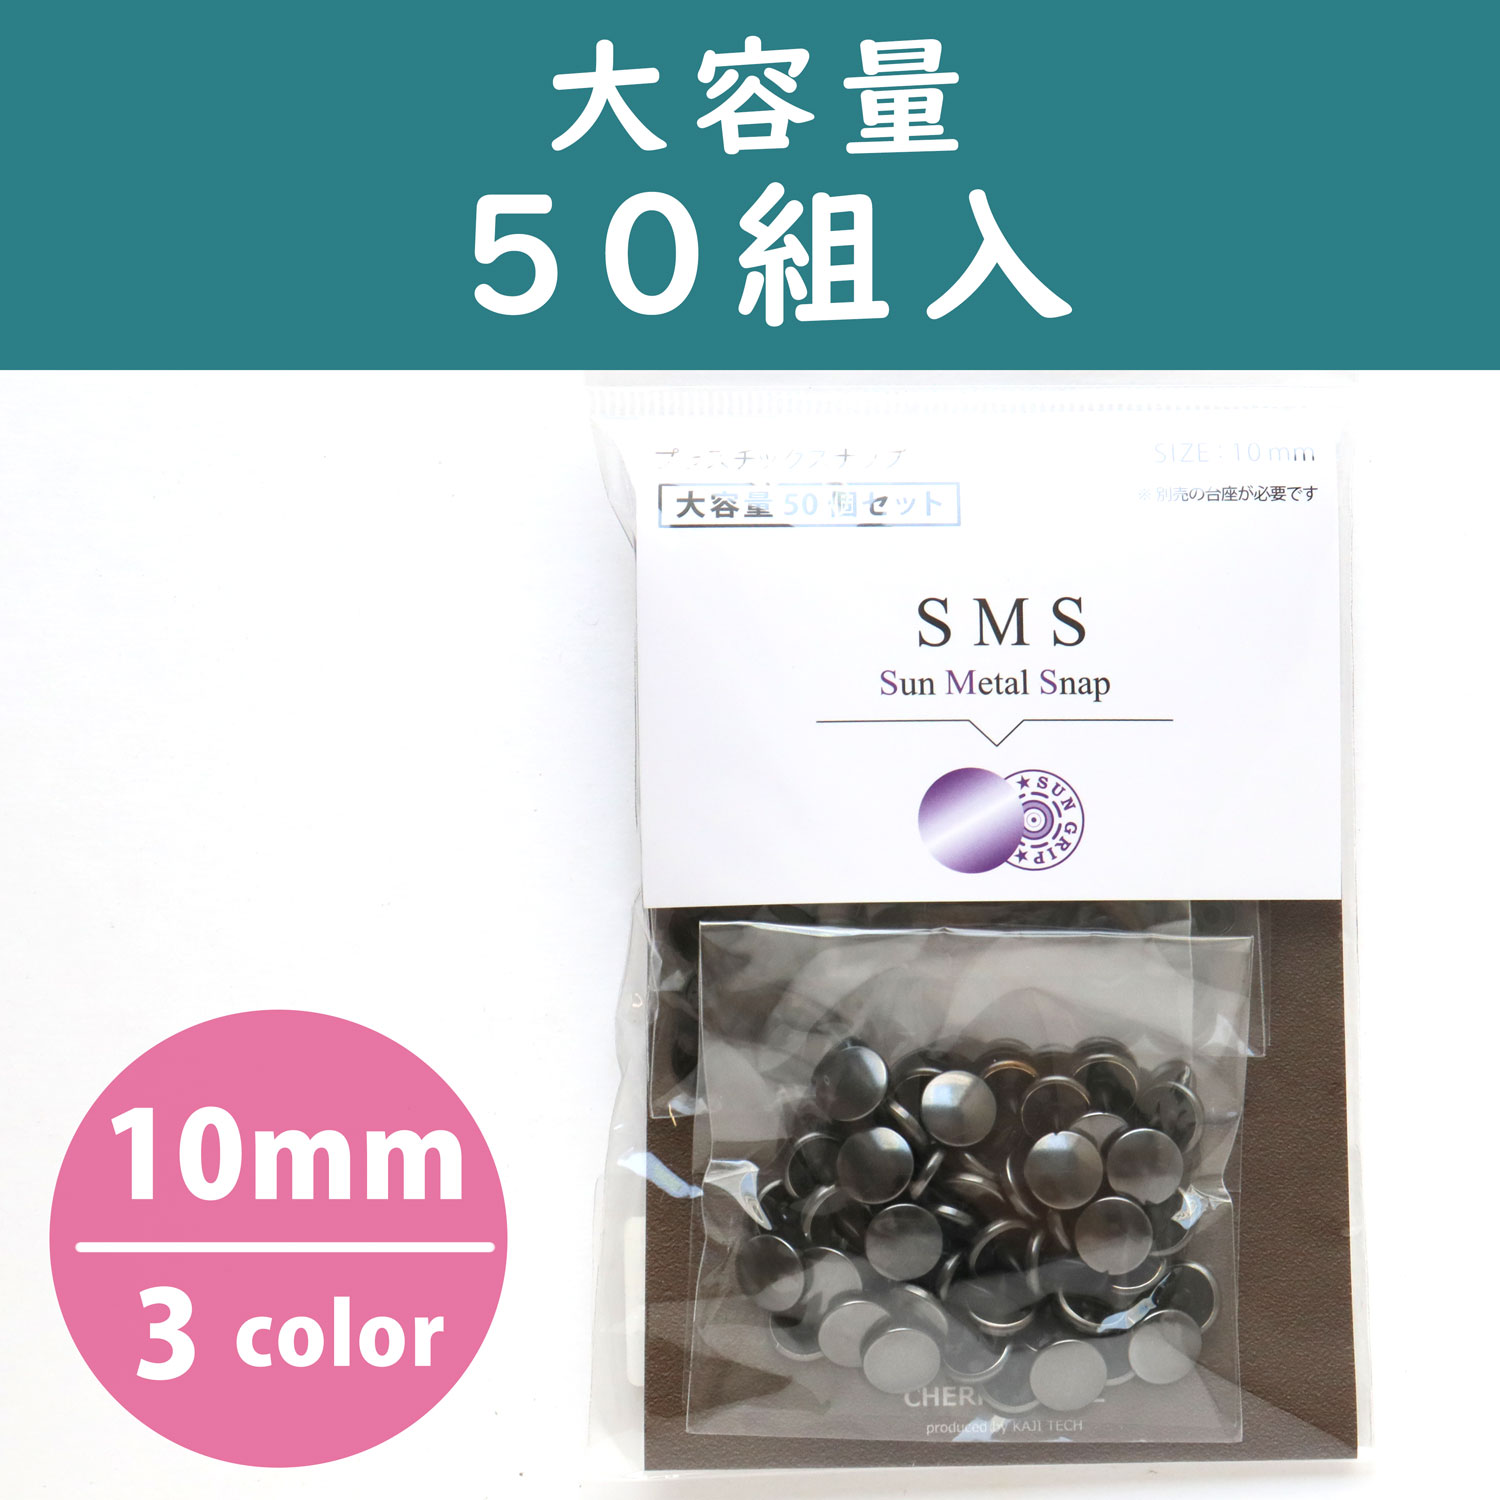 SMS10-50　SUN METAL SNAP メタル風スナップ 10mm 大容量50組入 (袋)